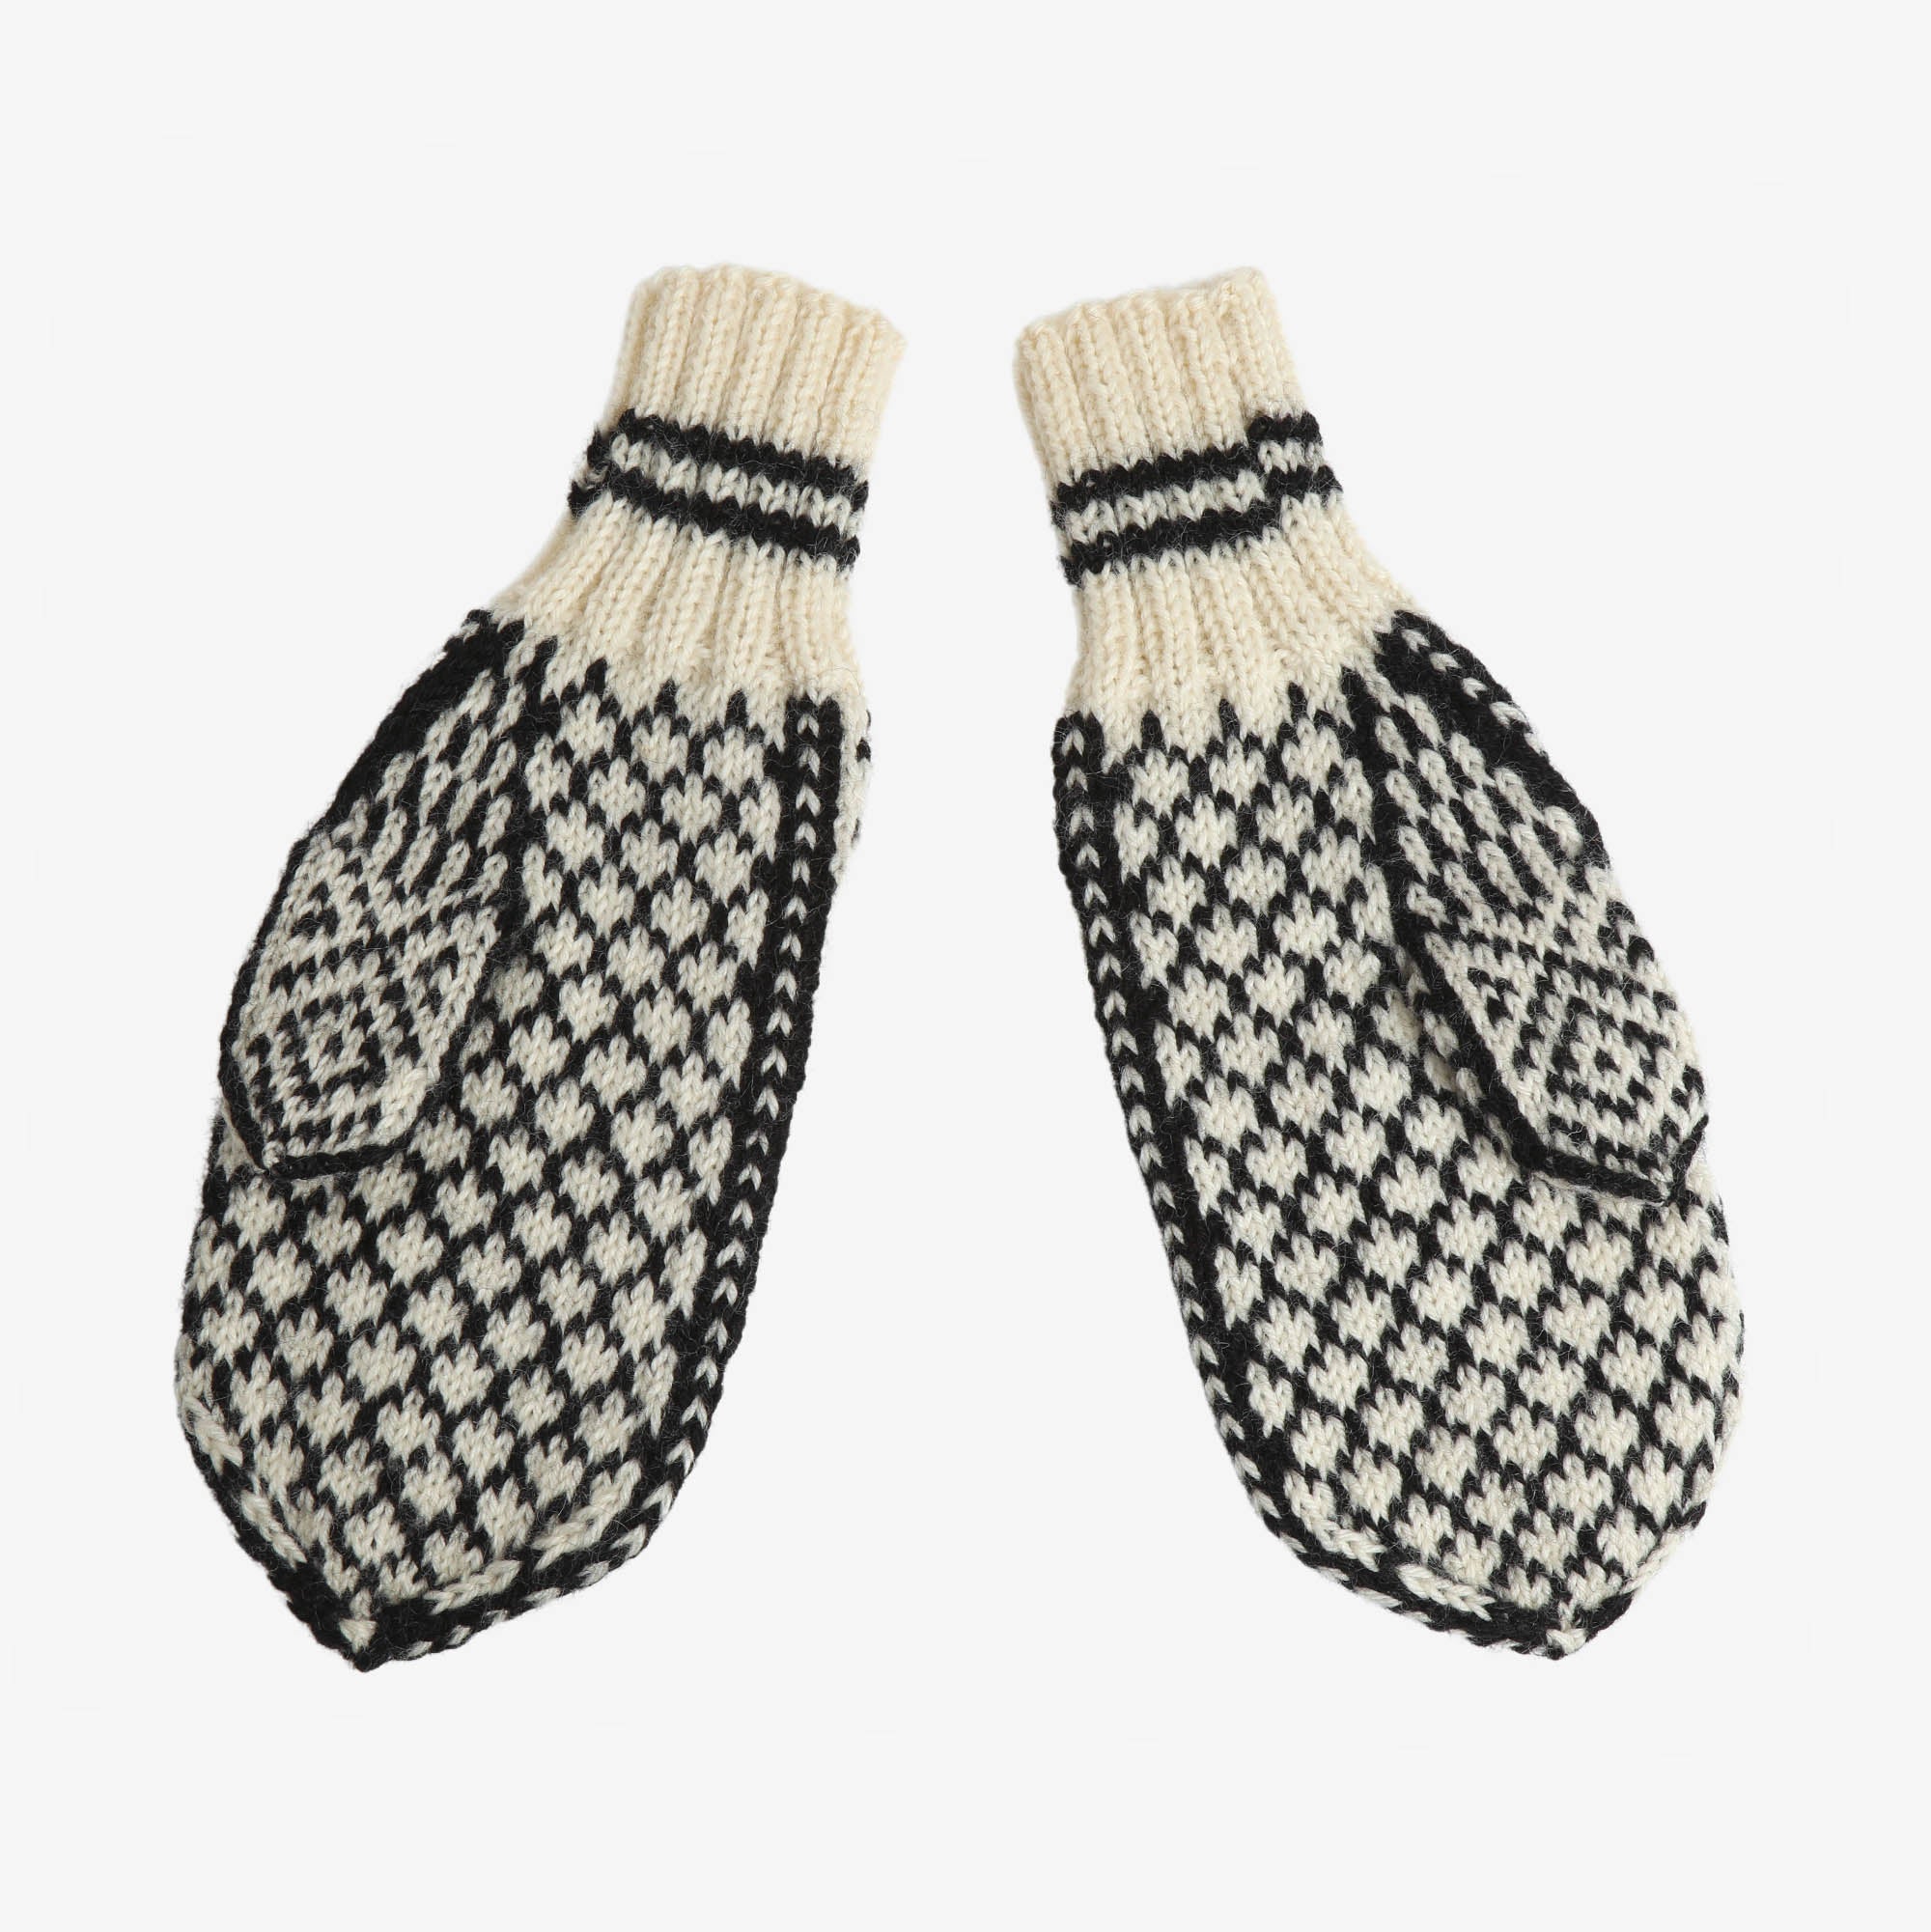 Traditional Norwegian Wool Gloves